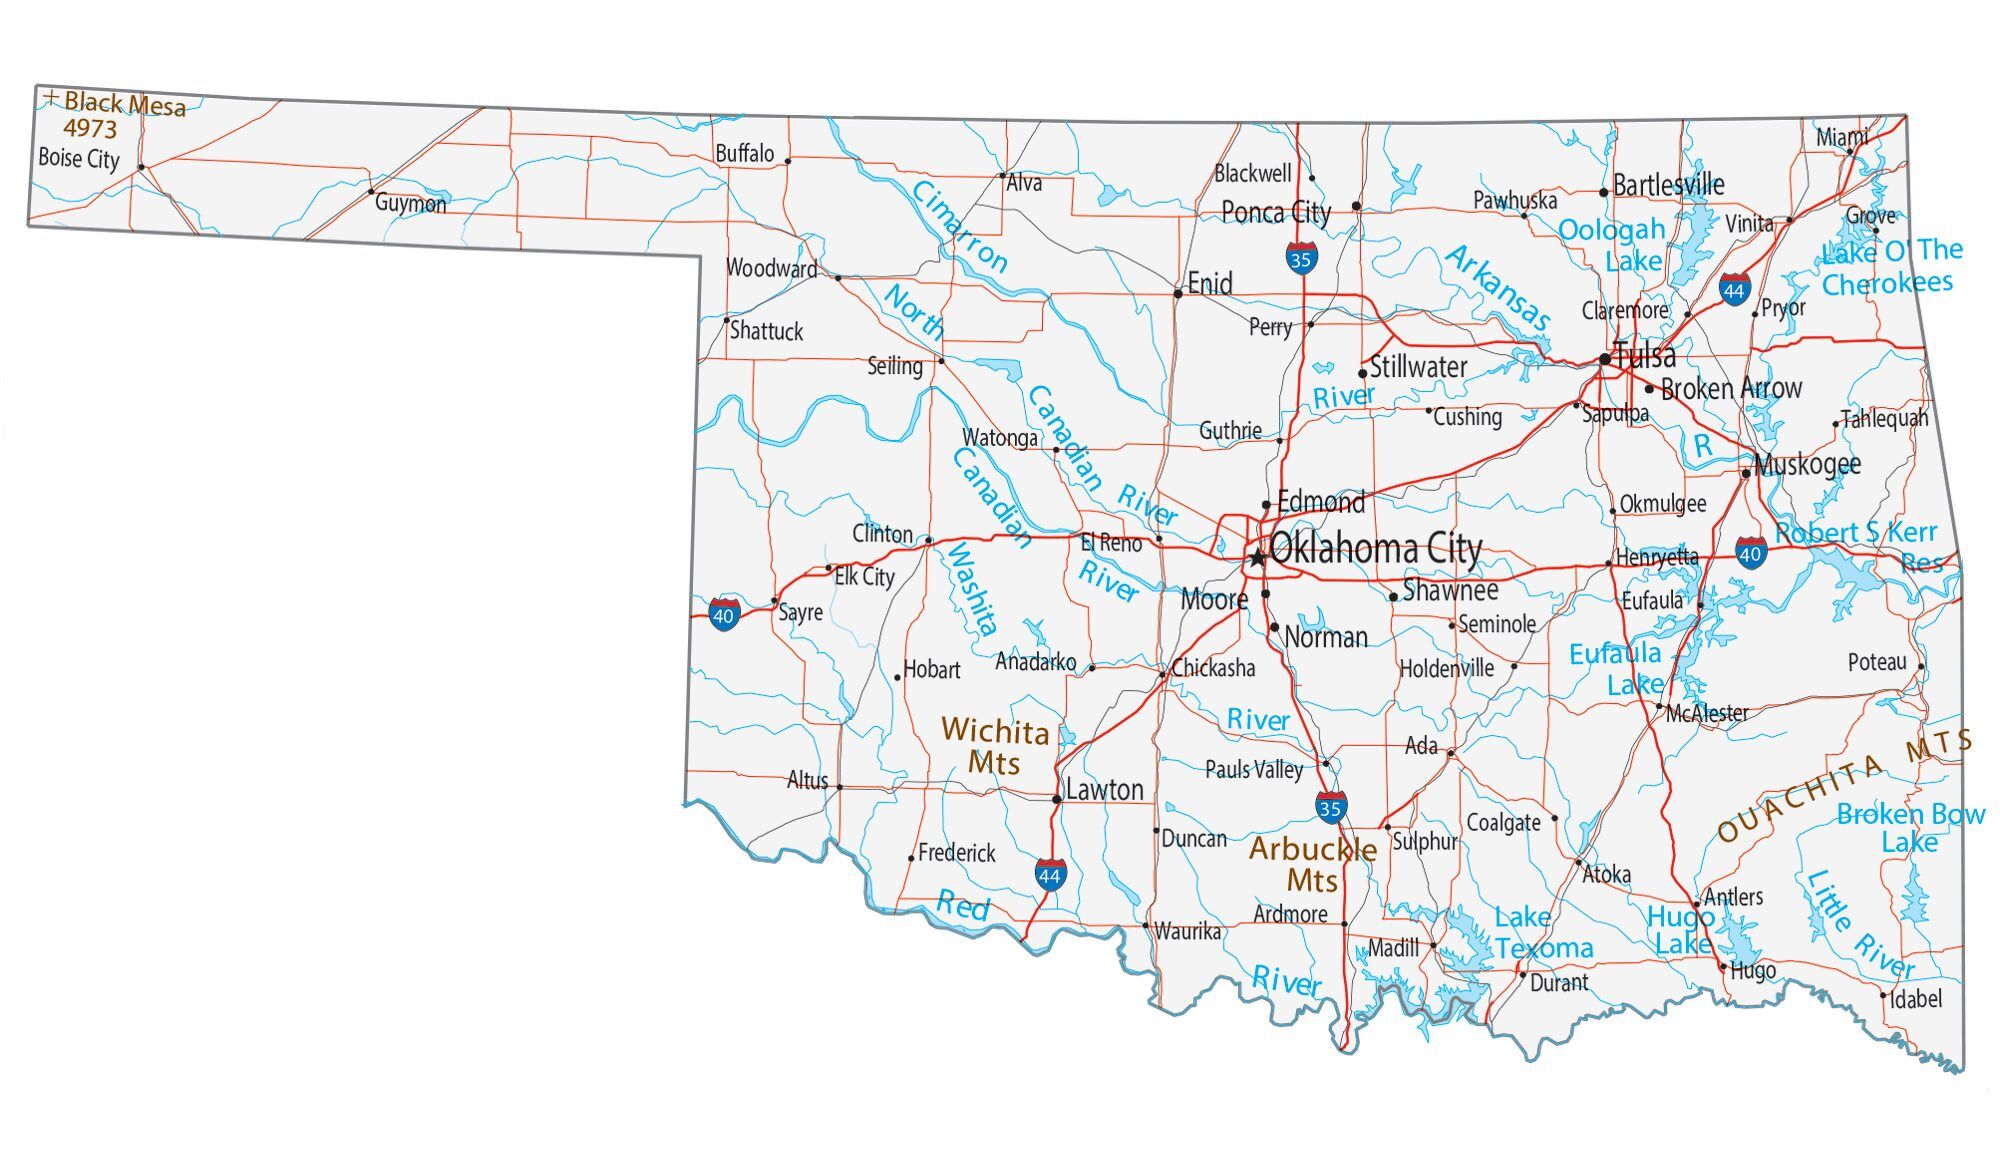 Stad in Oklahoma niet gevonden via wegenatlas